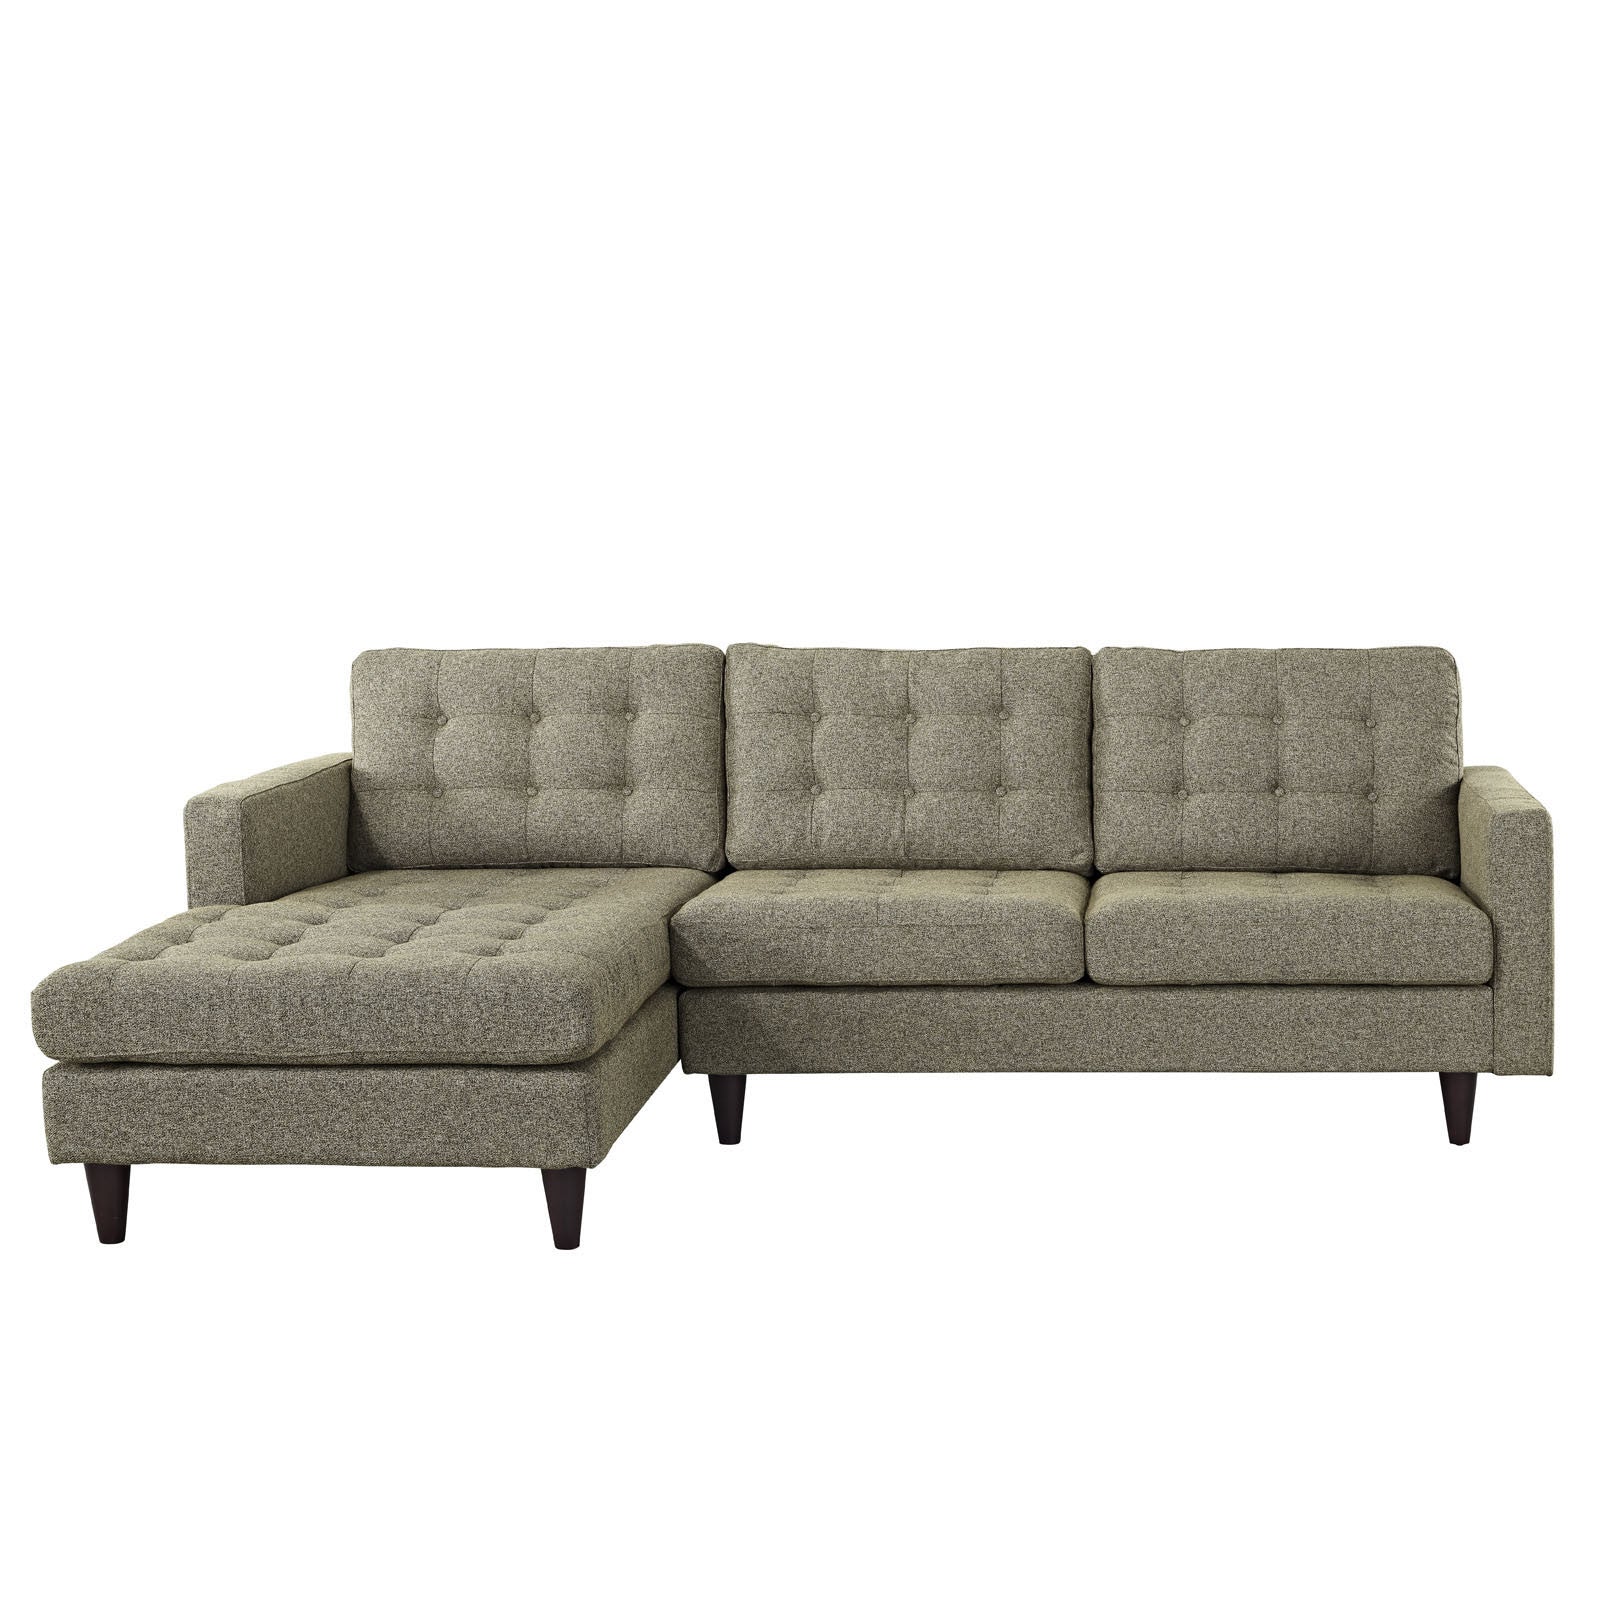 Era Upholstered Sectional Sofa Oatmeal